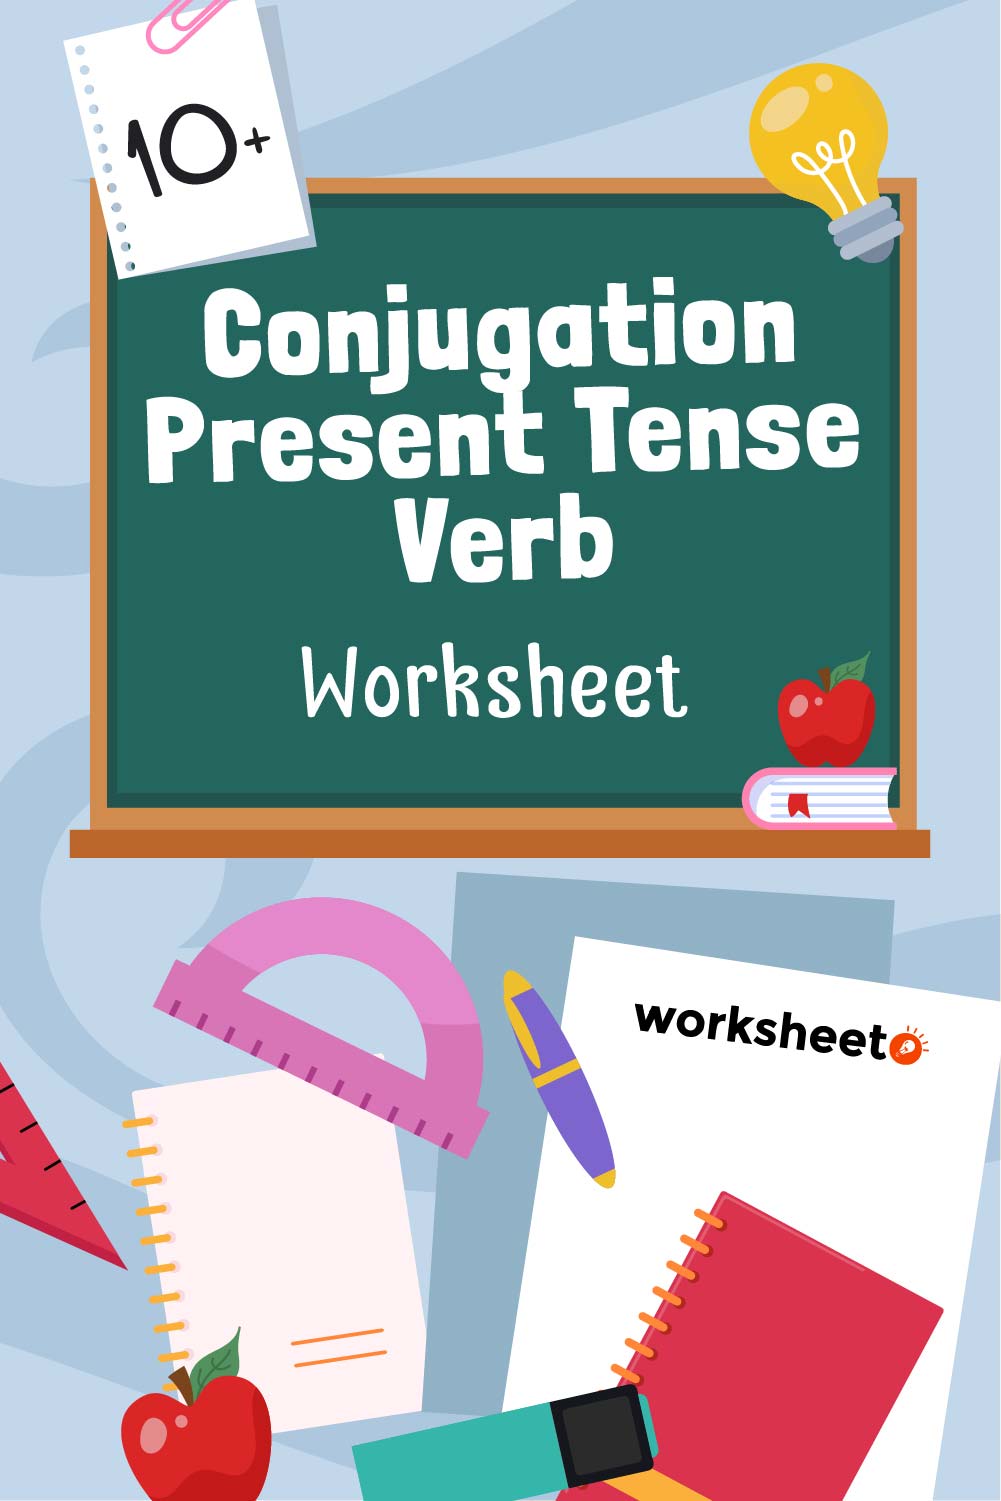 Conjugation Present Tense Verb Worksheet